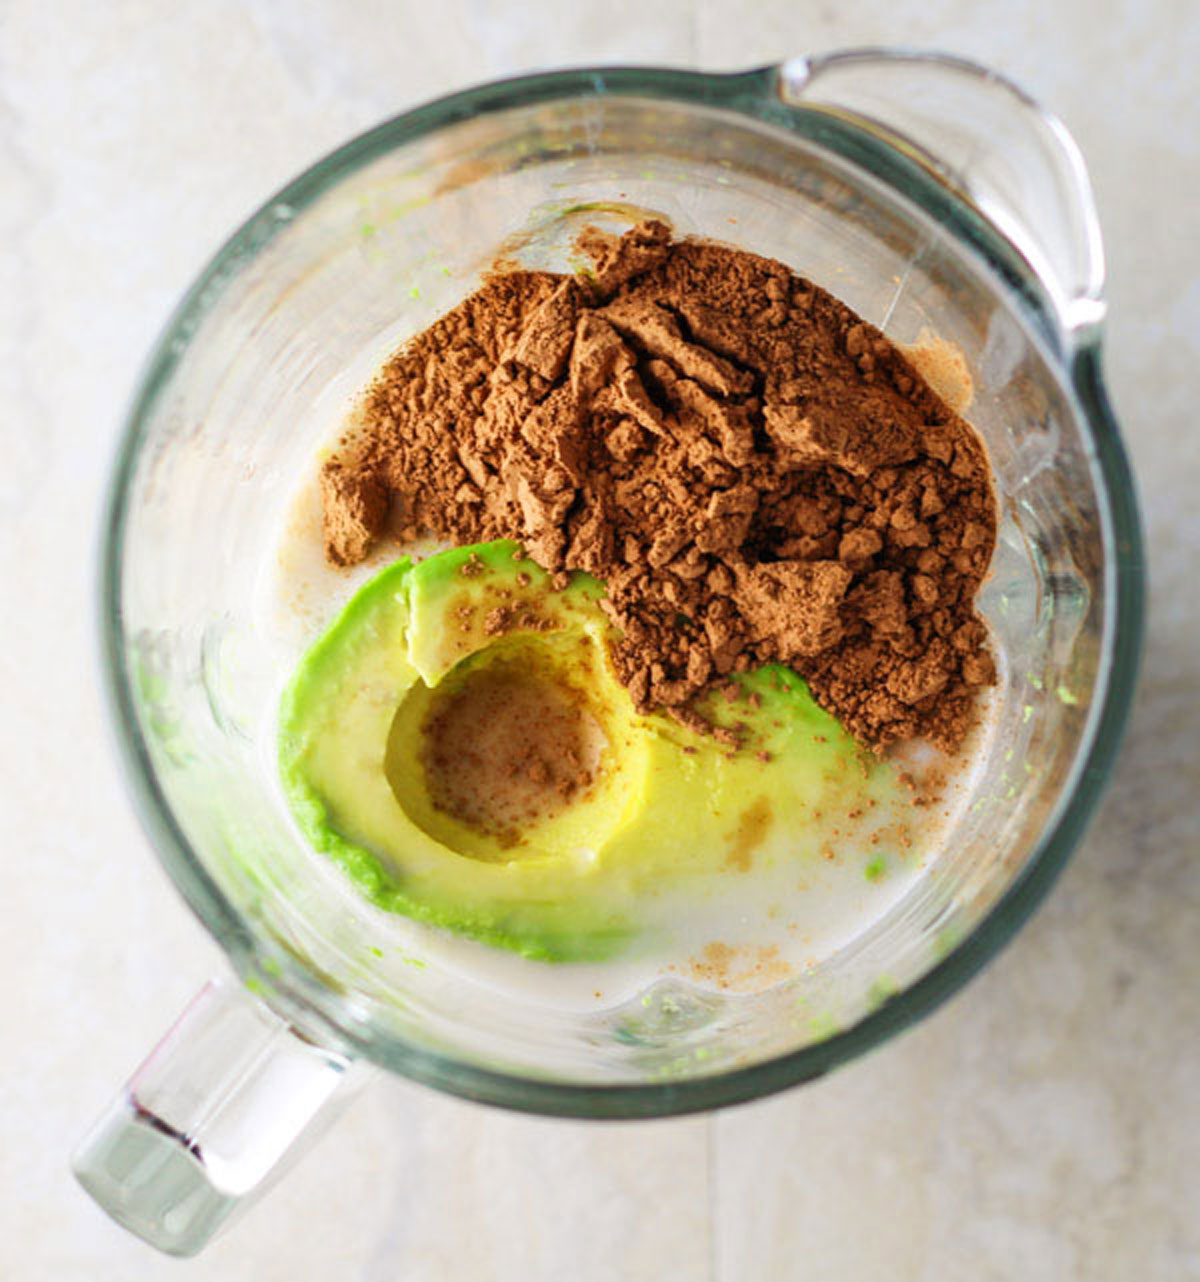 avocado, cacao power, almond milk, banana and honey in a blender